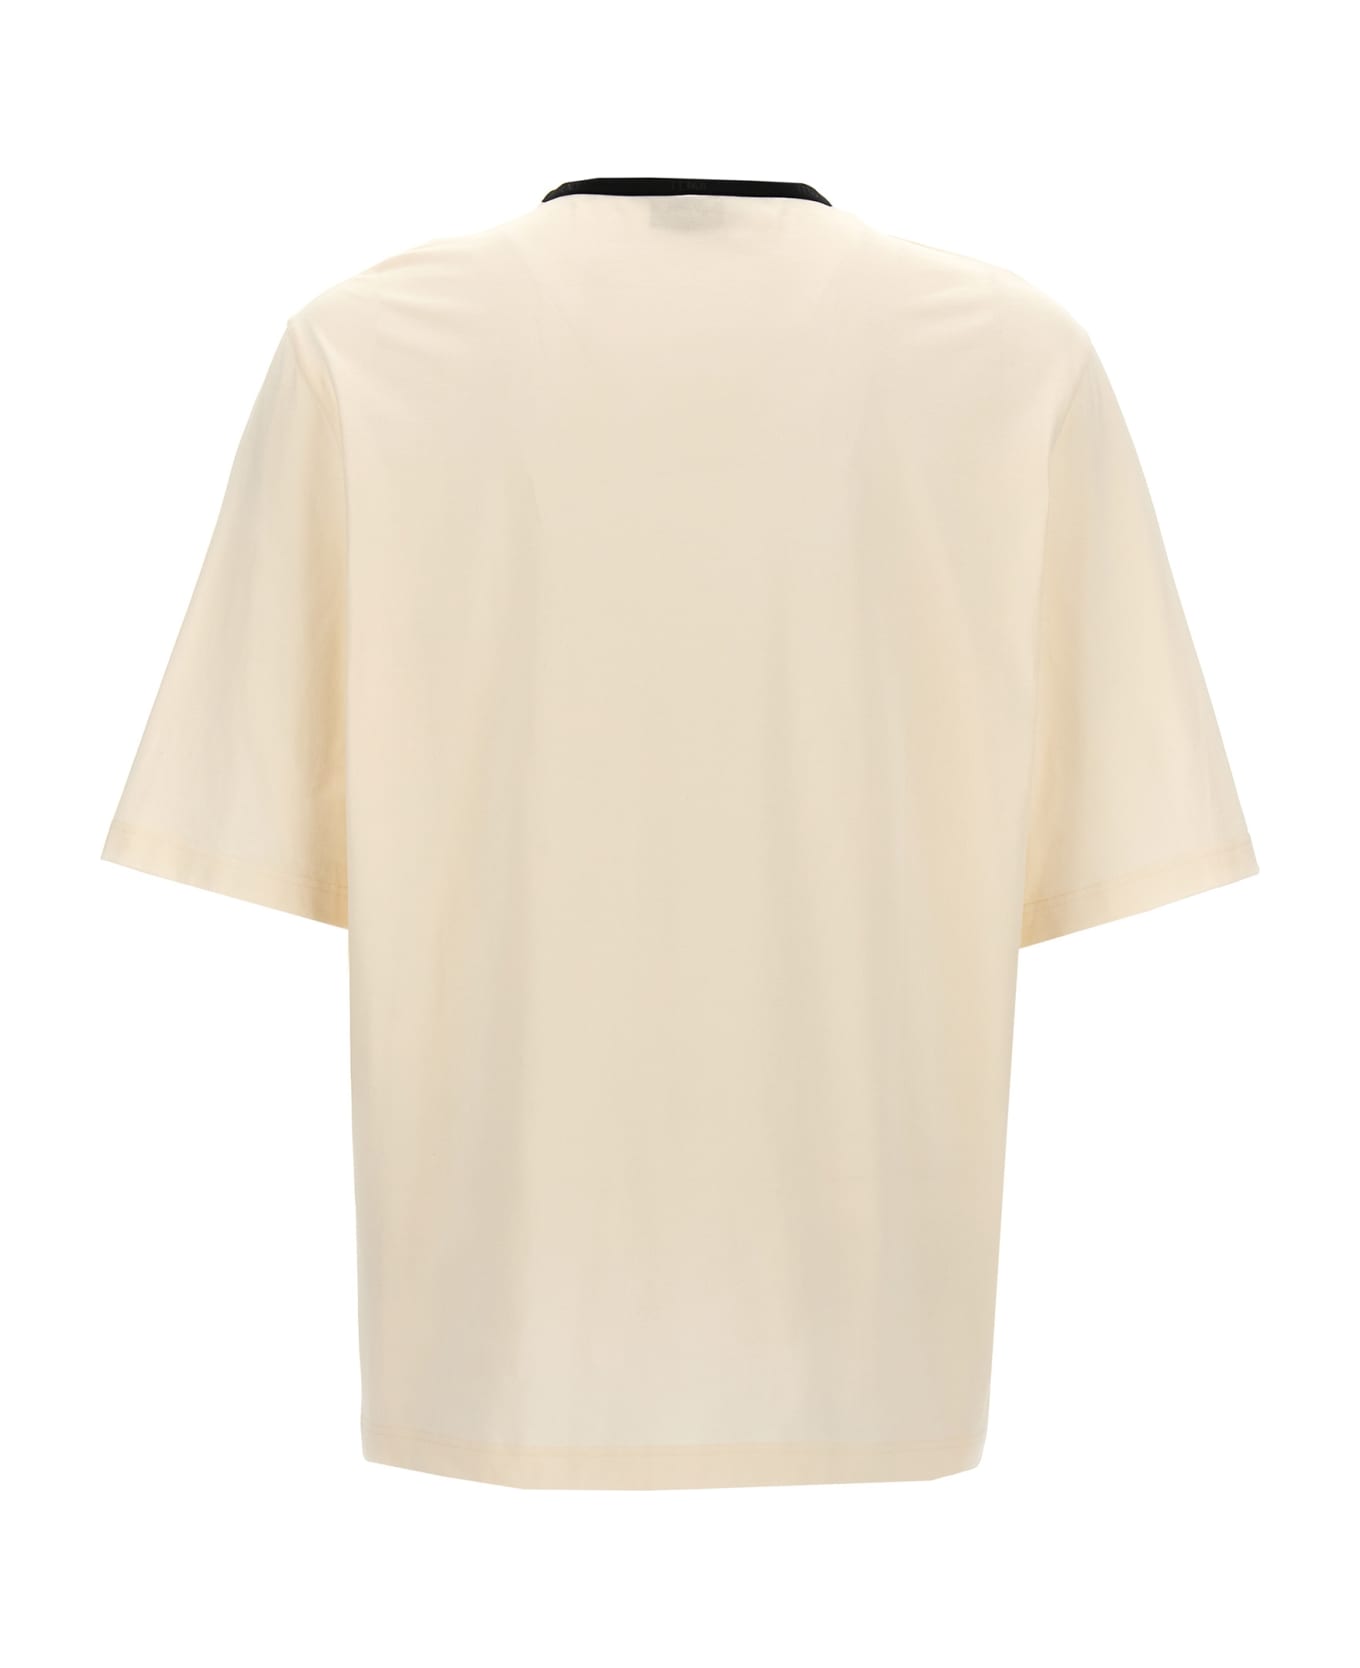 Fendi 'gradient Ff' Logo T-shirt - White/Black